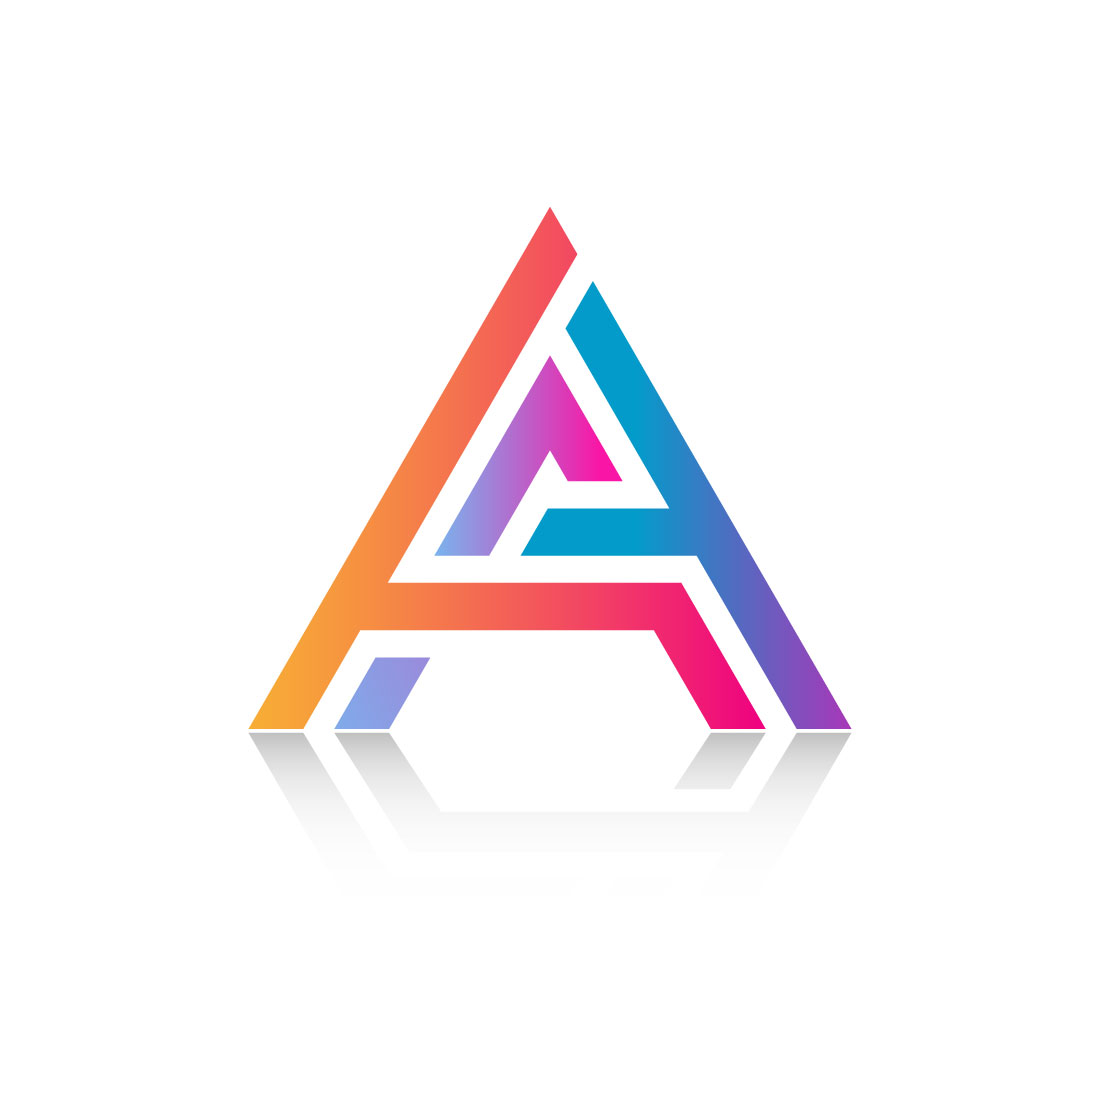 Colorful A Letter Logo Design cover image.